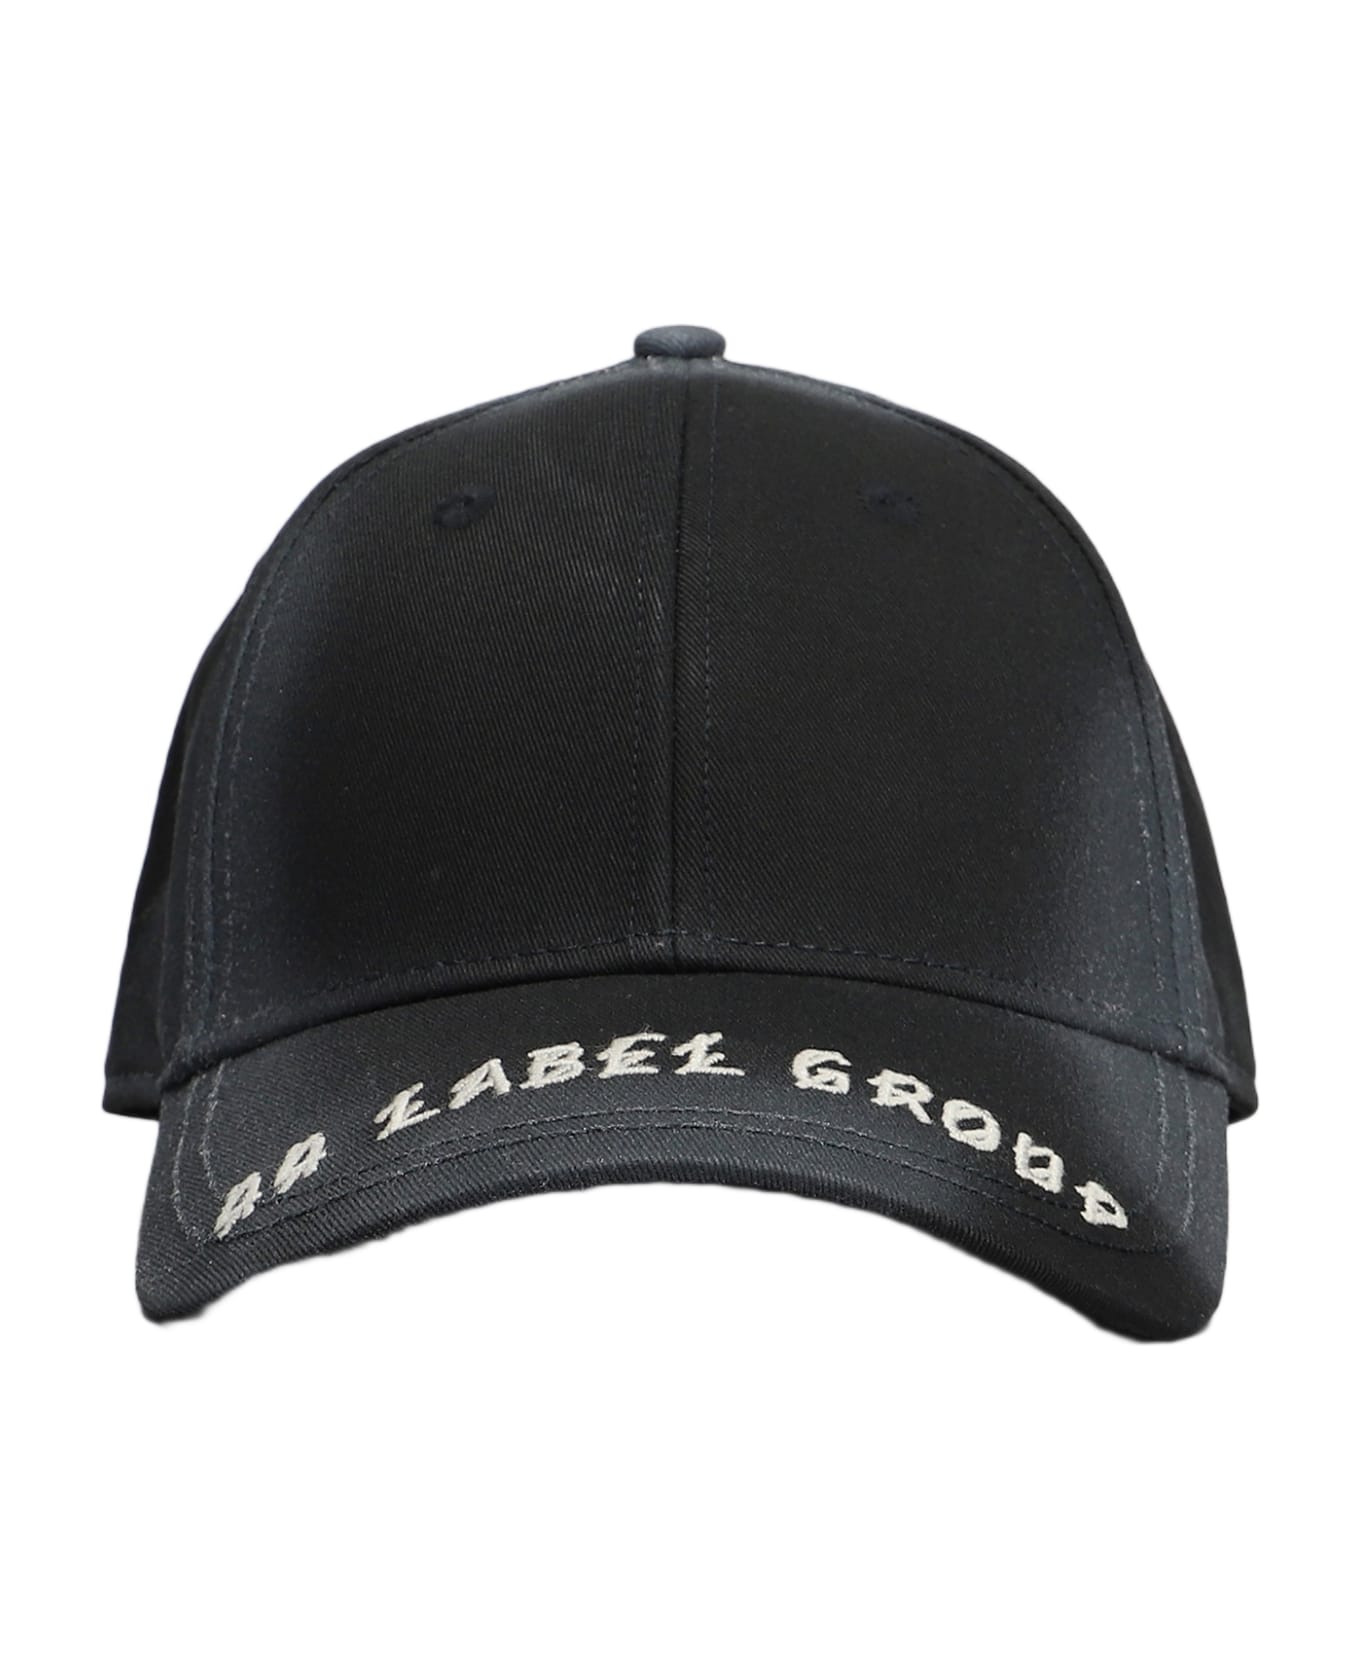 44 Label Group Hats In Black Cotton - black 帽子